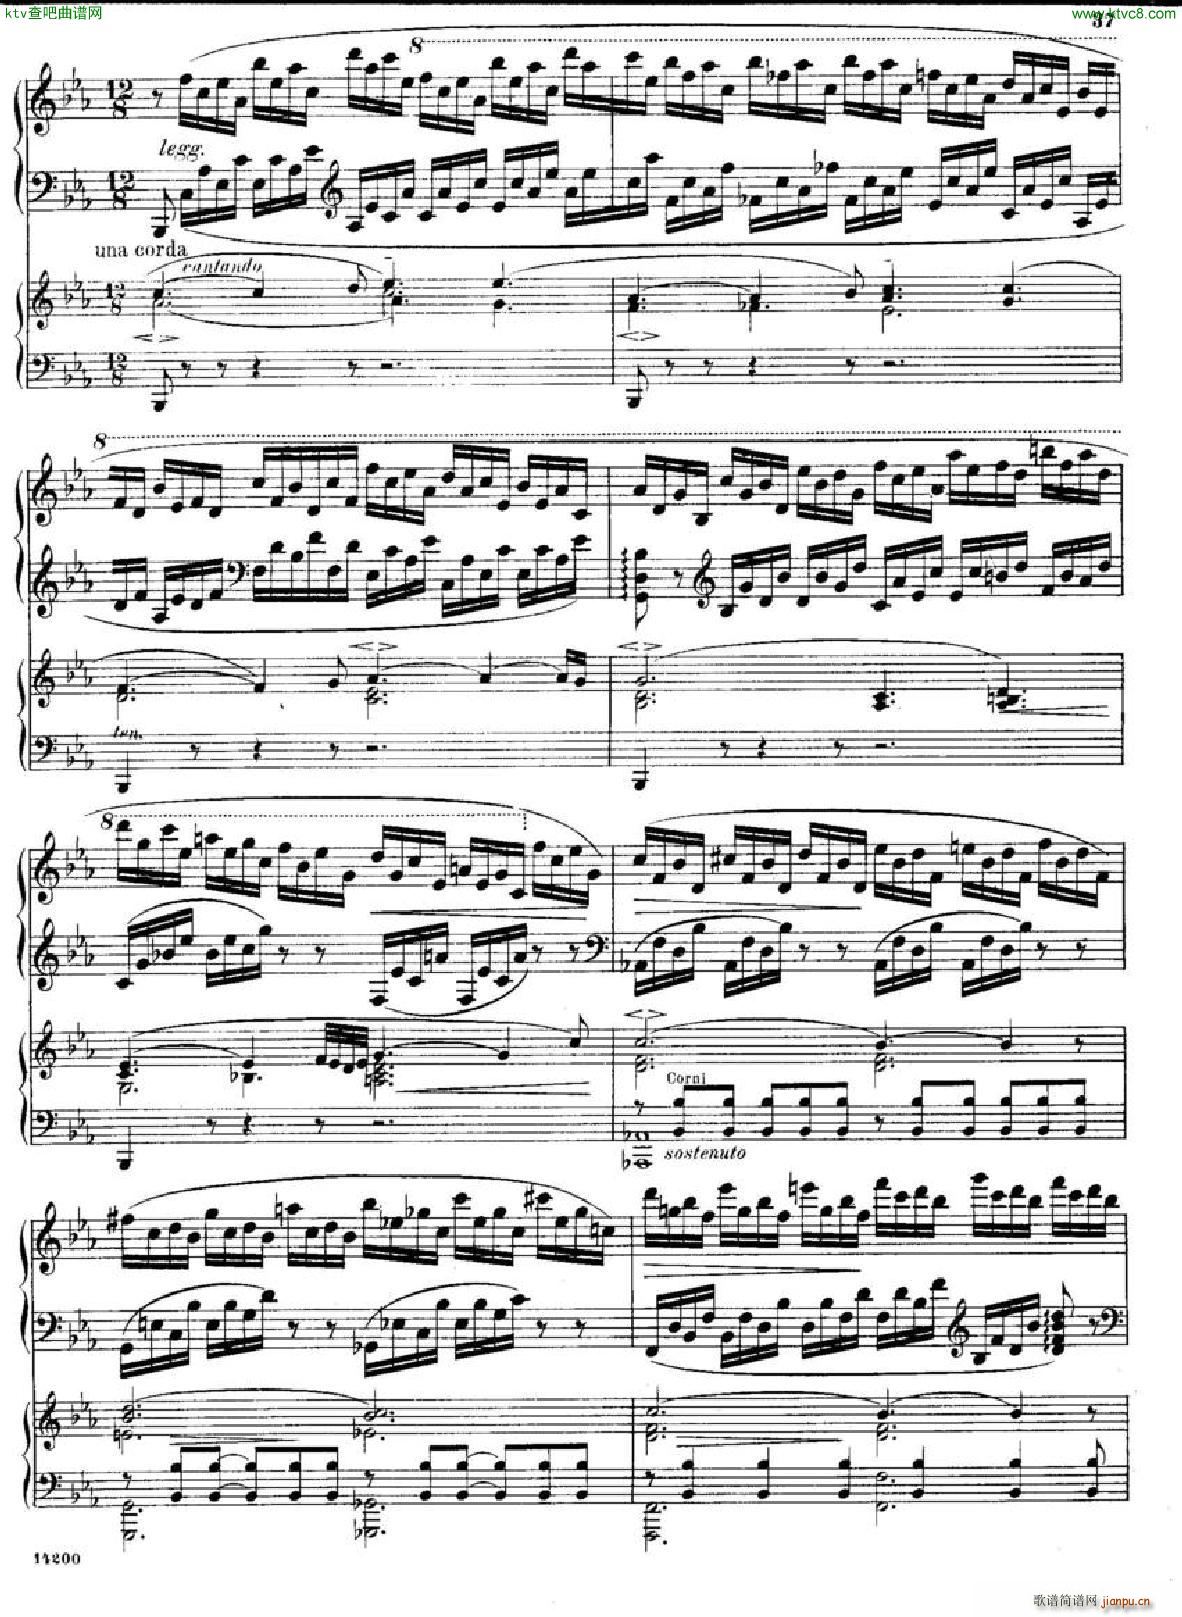 huss concerto part3()3